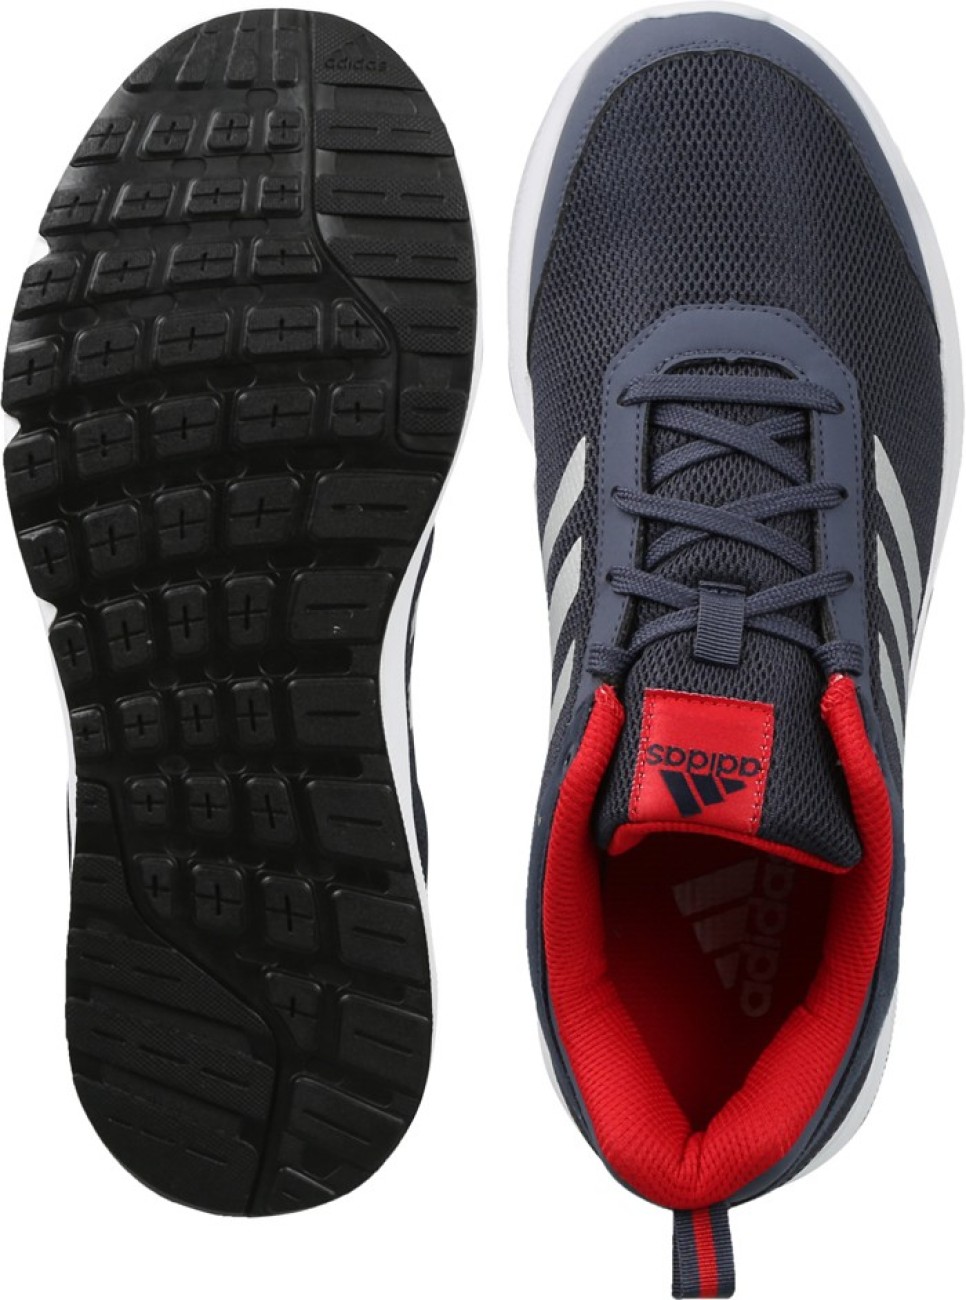 adidas erdiga 3 m running shoes review